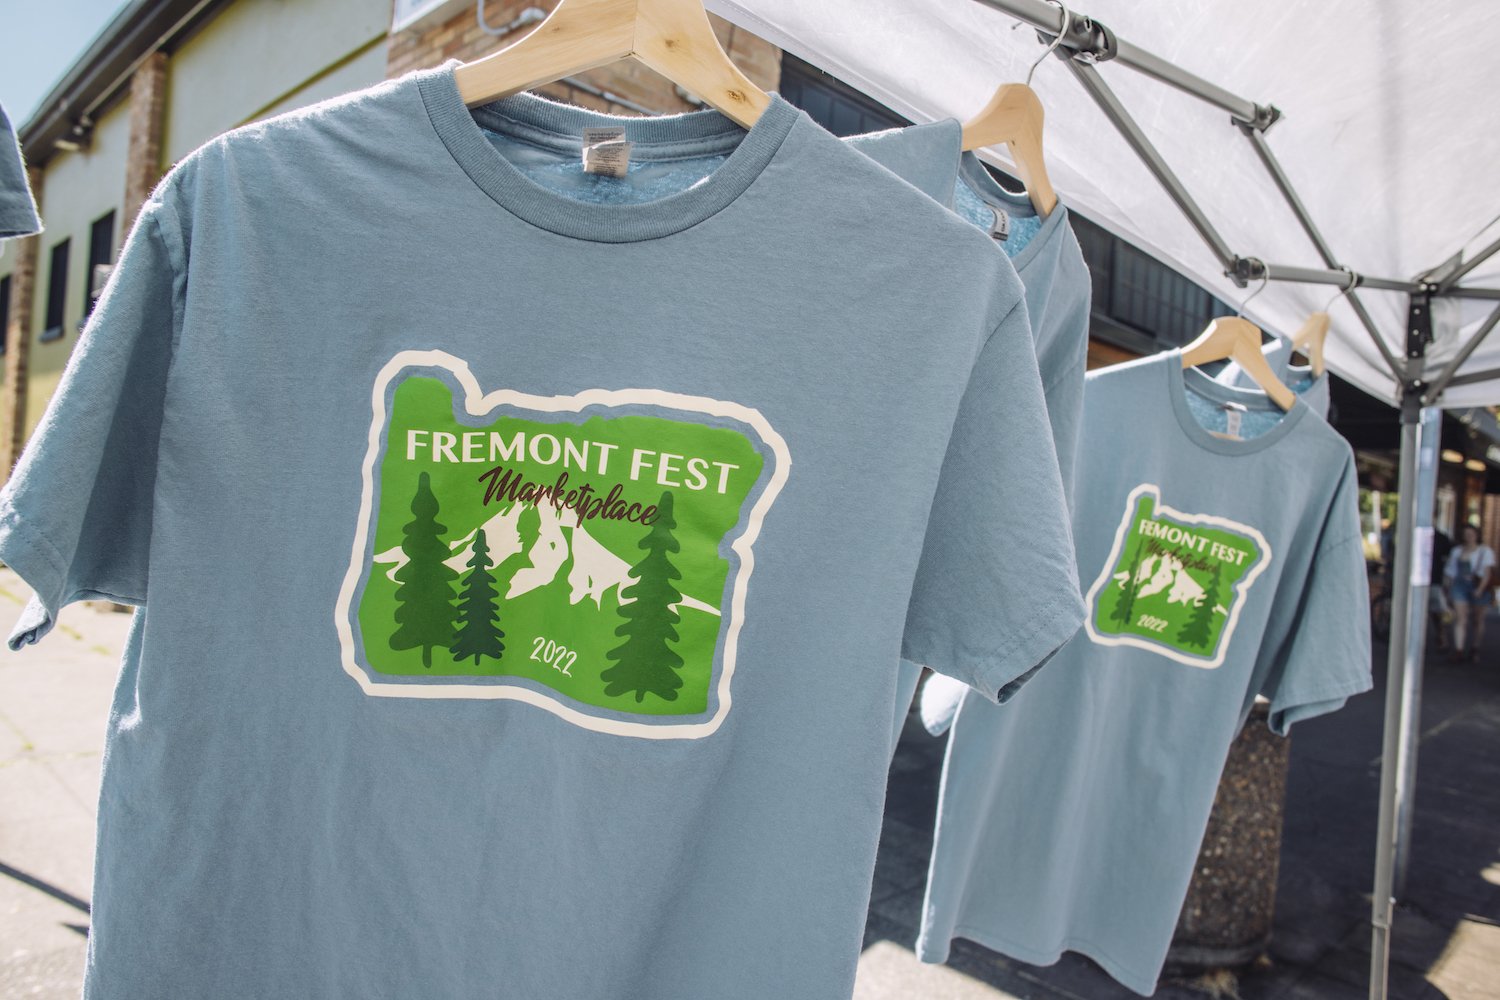 Fremont-Fest-shirts-2.jpg